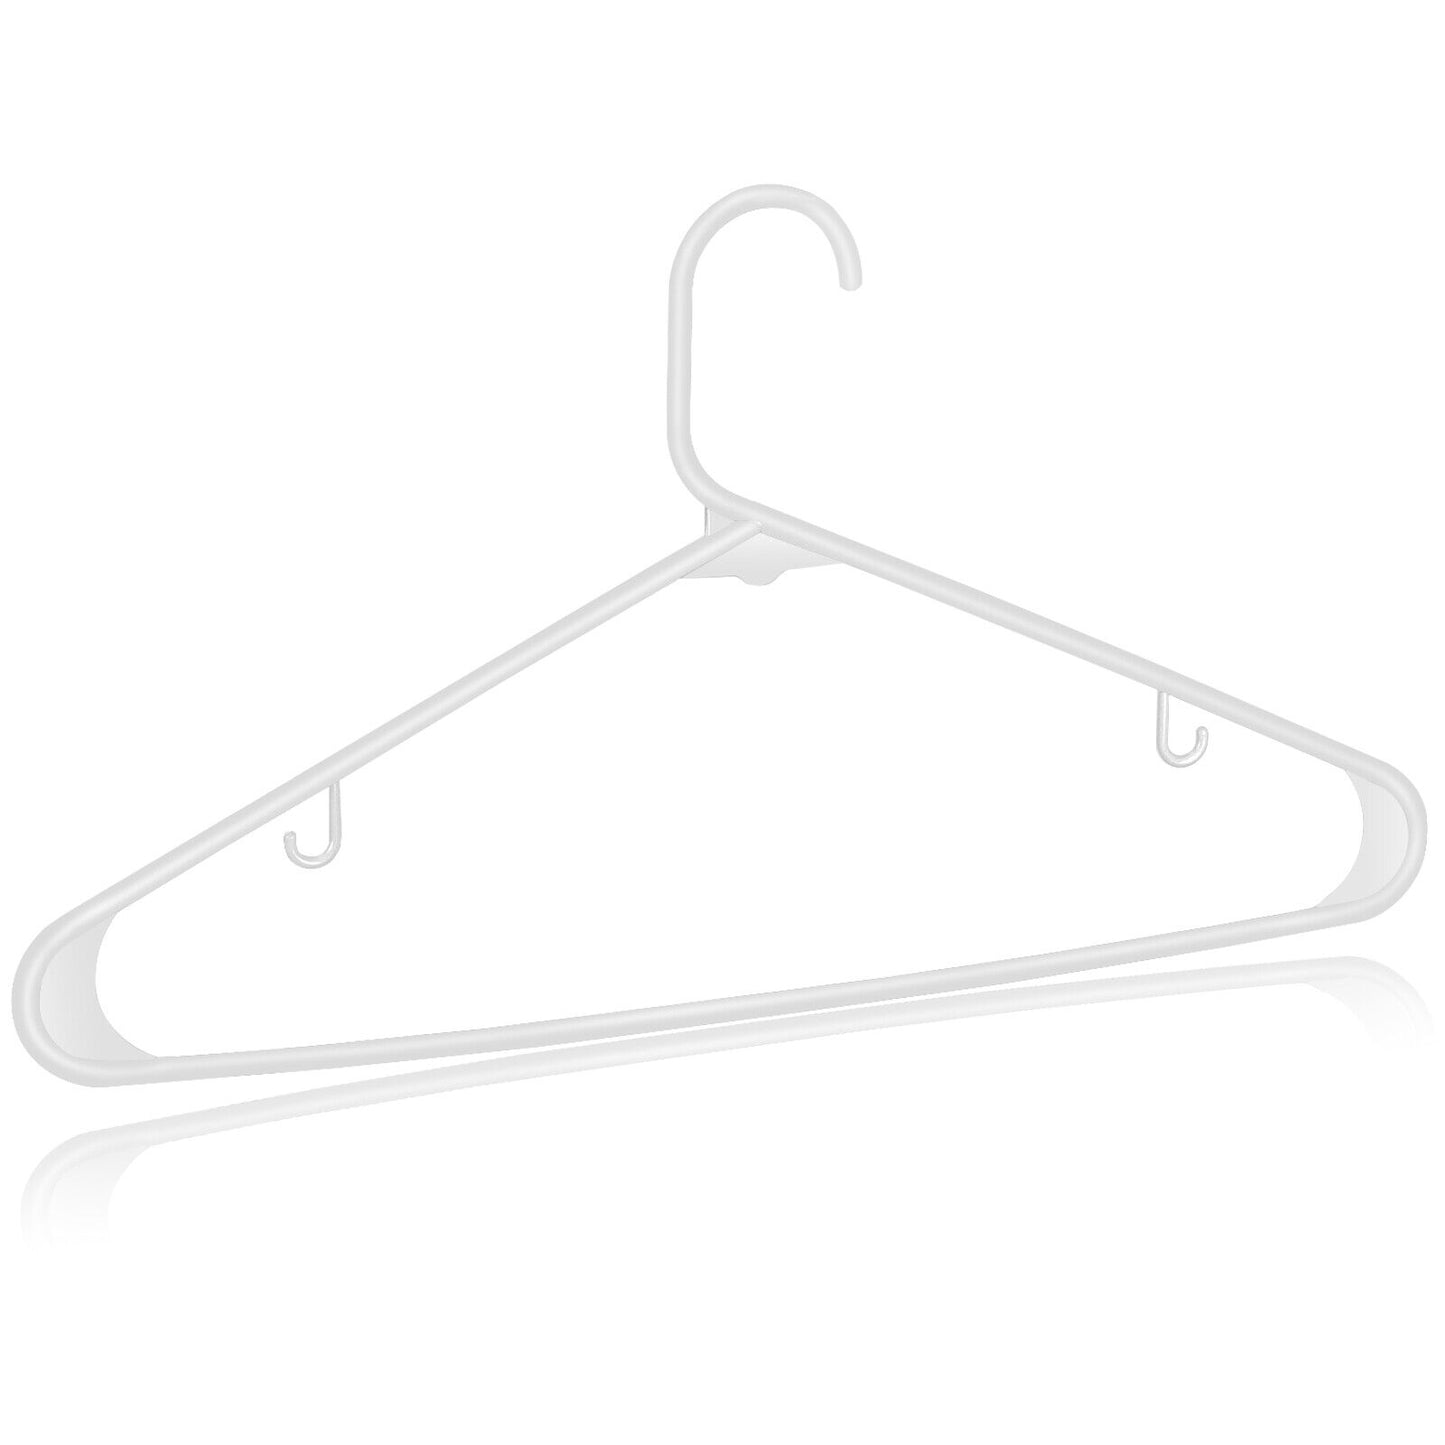 Premium Quality Clothes Hangers (100 Pack) Plastic Gallus Shirt Hanger